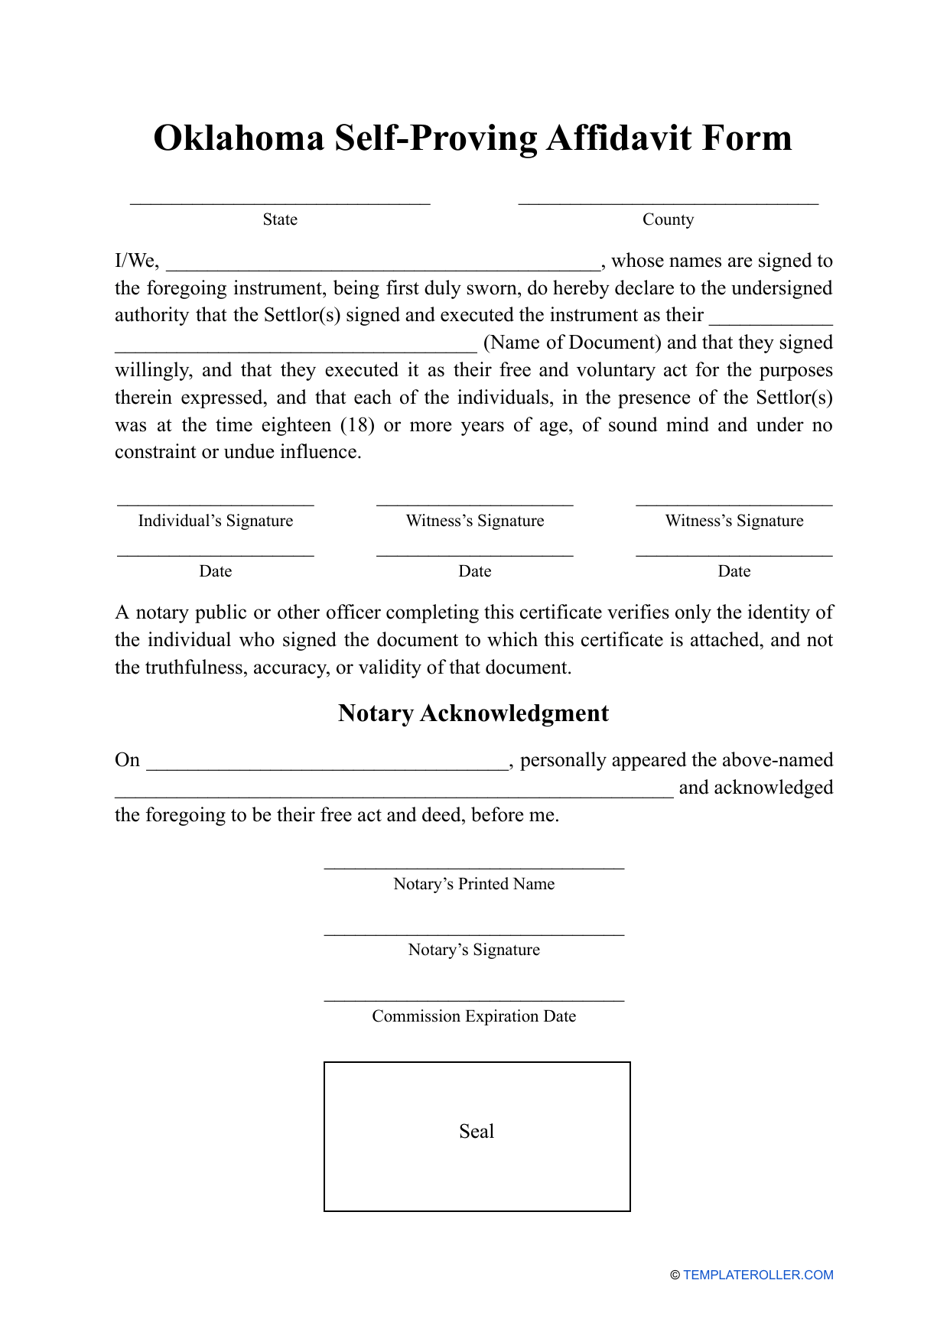 Self-proving Affidavit Form - Oklahoma, Page 1